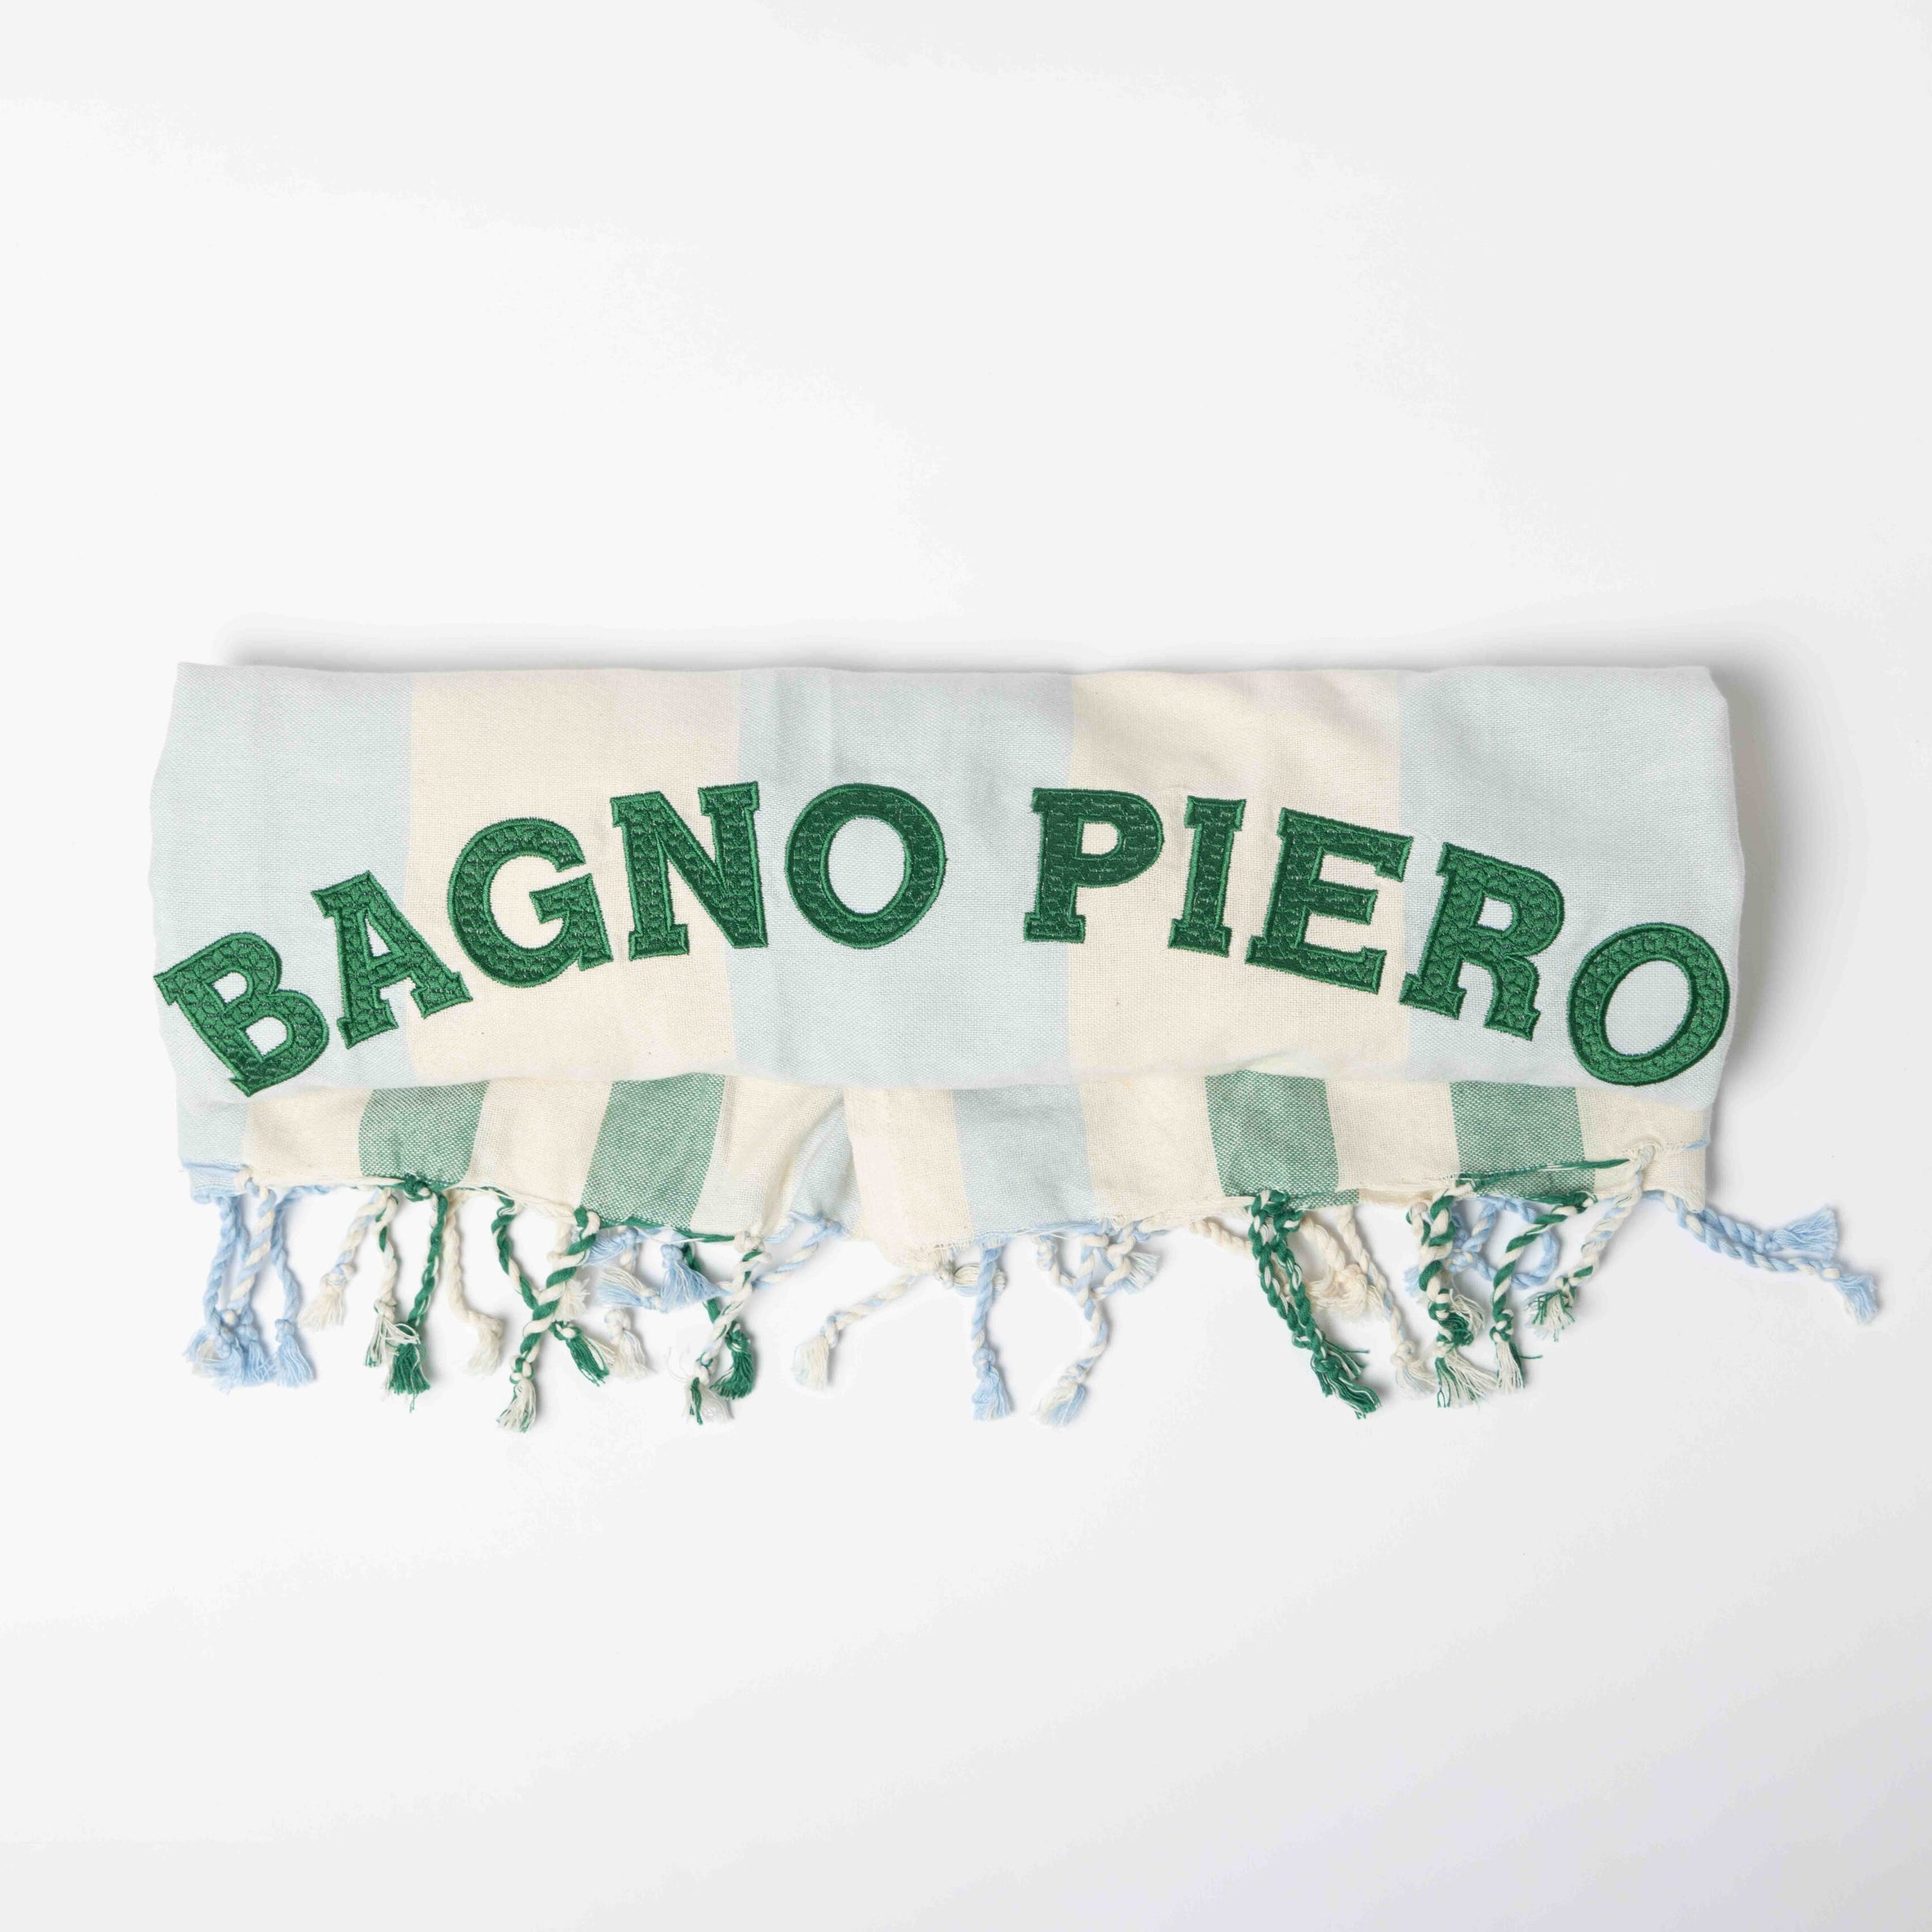 Bagno Piero x Saint Barth beach towel